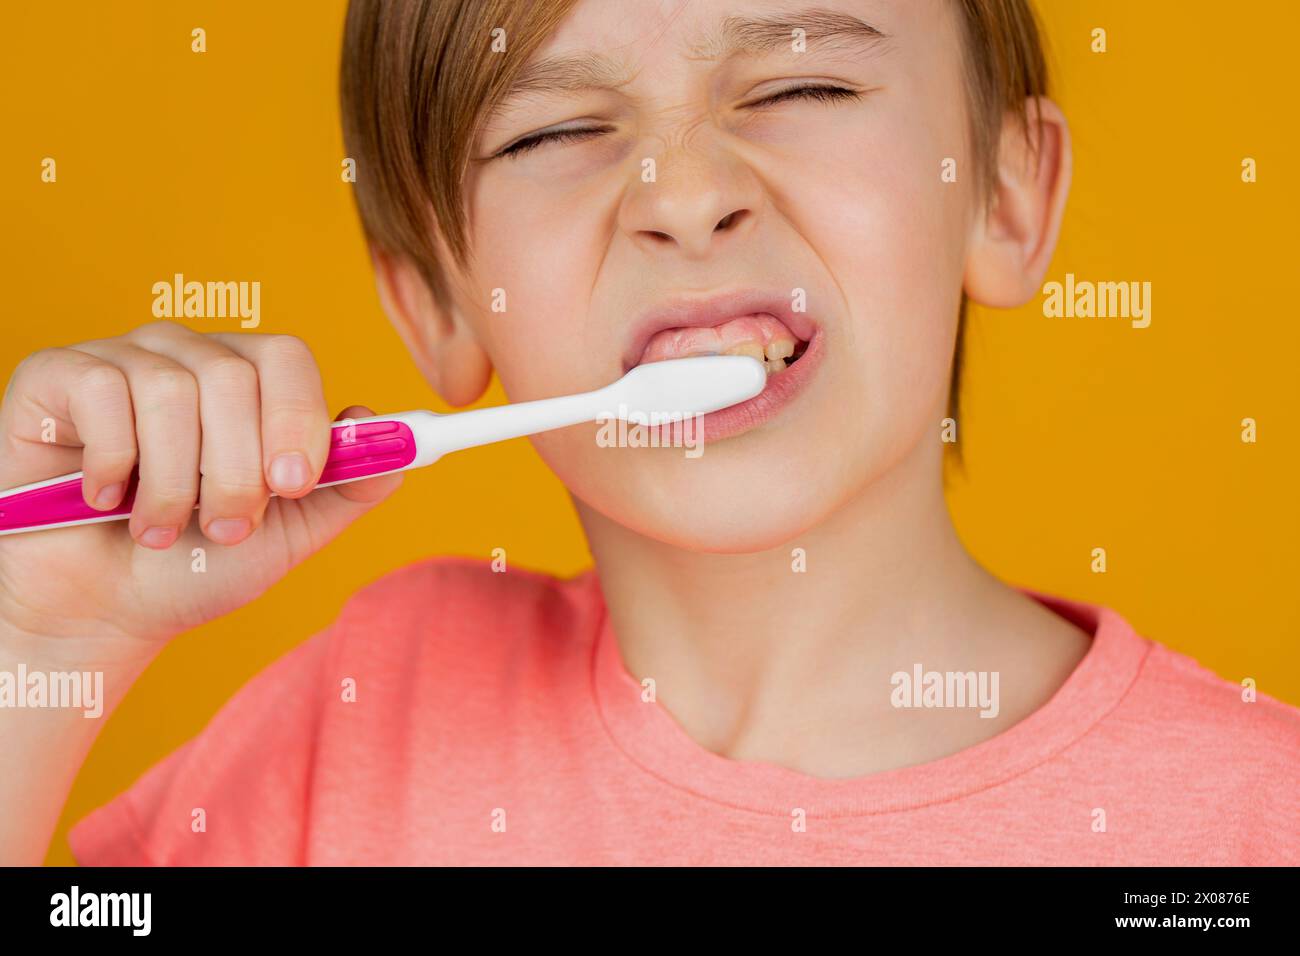 Dental hygiene. Little kid brushing her teeth. Kid boy brushing teeth. Boy toothbrush white toothpaste. Health care, dental hygiene. Child shows Stock Photo